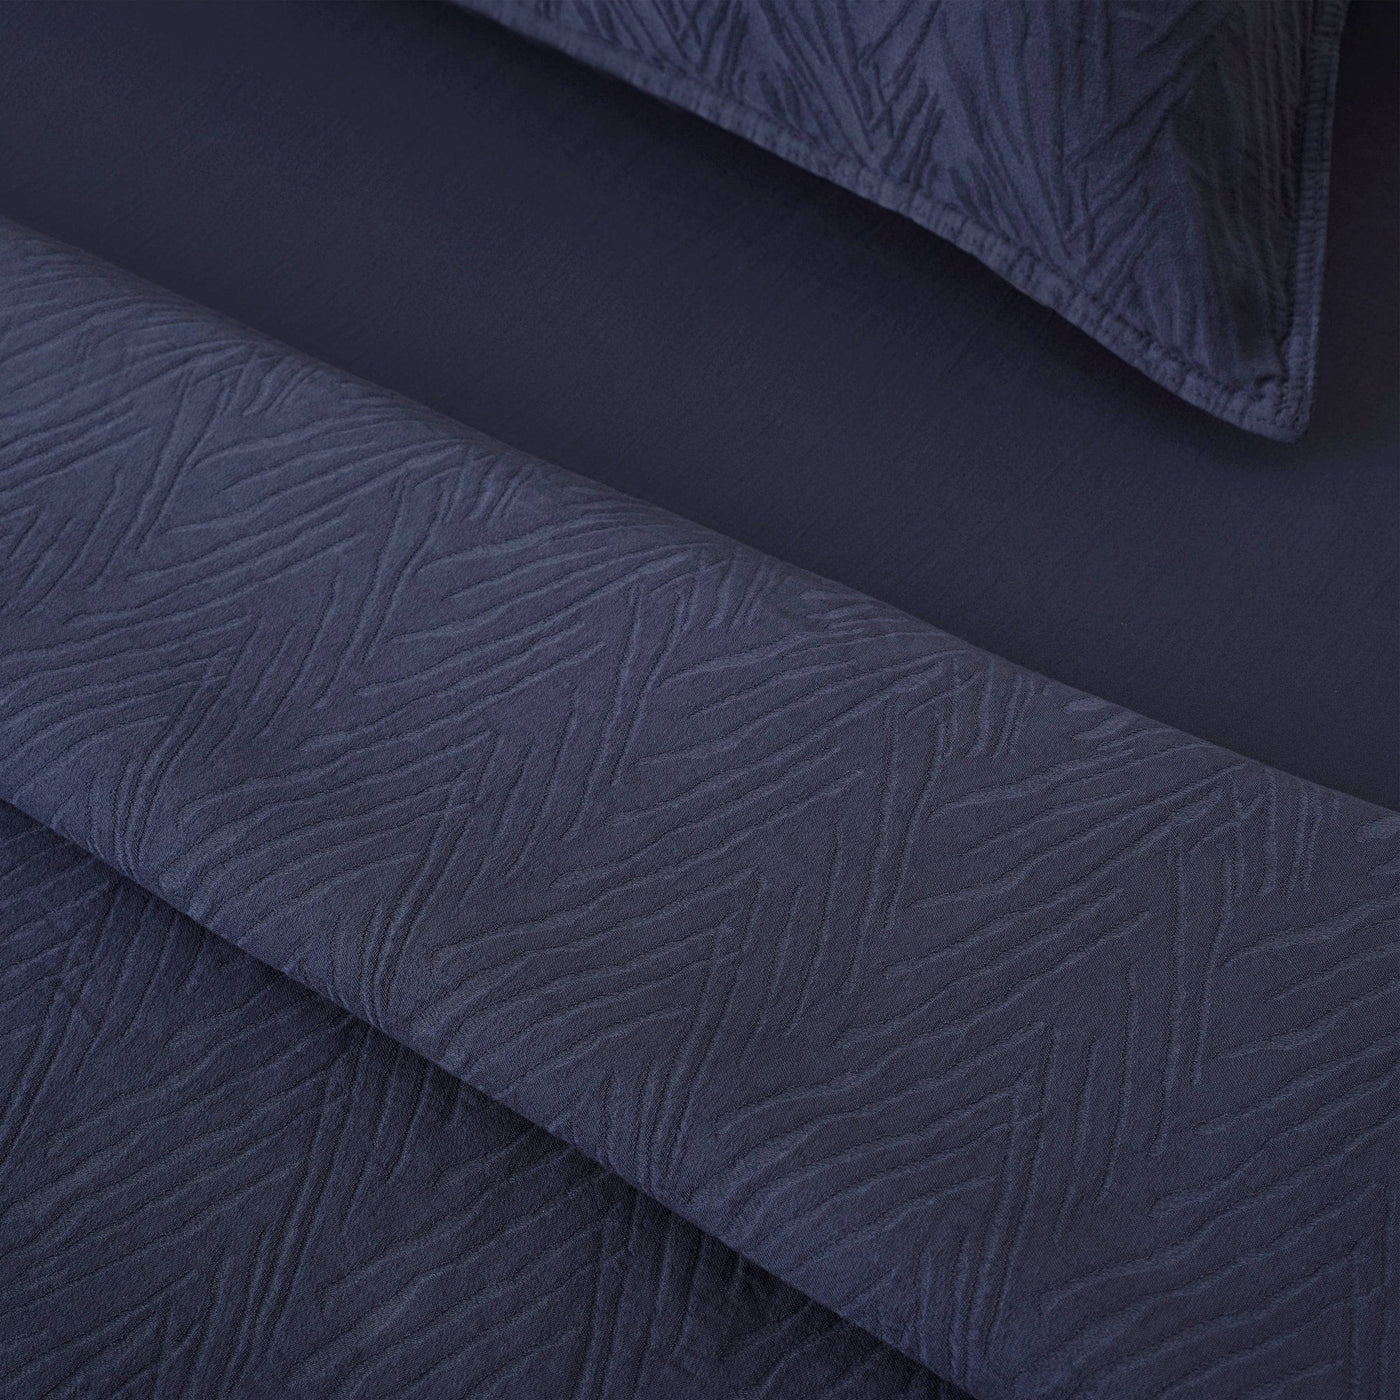 Freddie 100% Turkish Cotton Jacquard 300 TC Duvet Cover Set + Fitted Sheet, Navy, Double Size Bedding Sets sazy.com